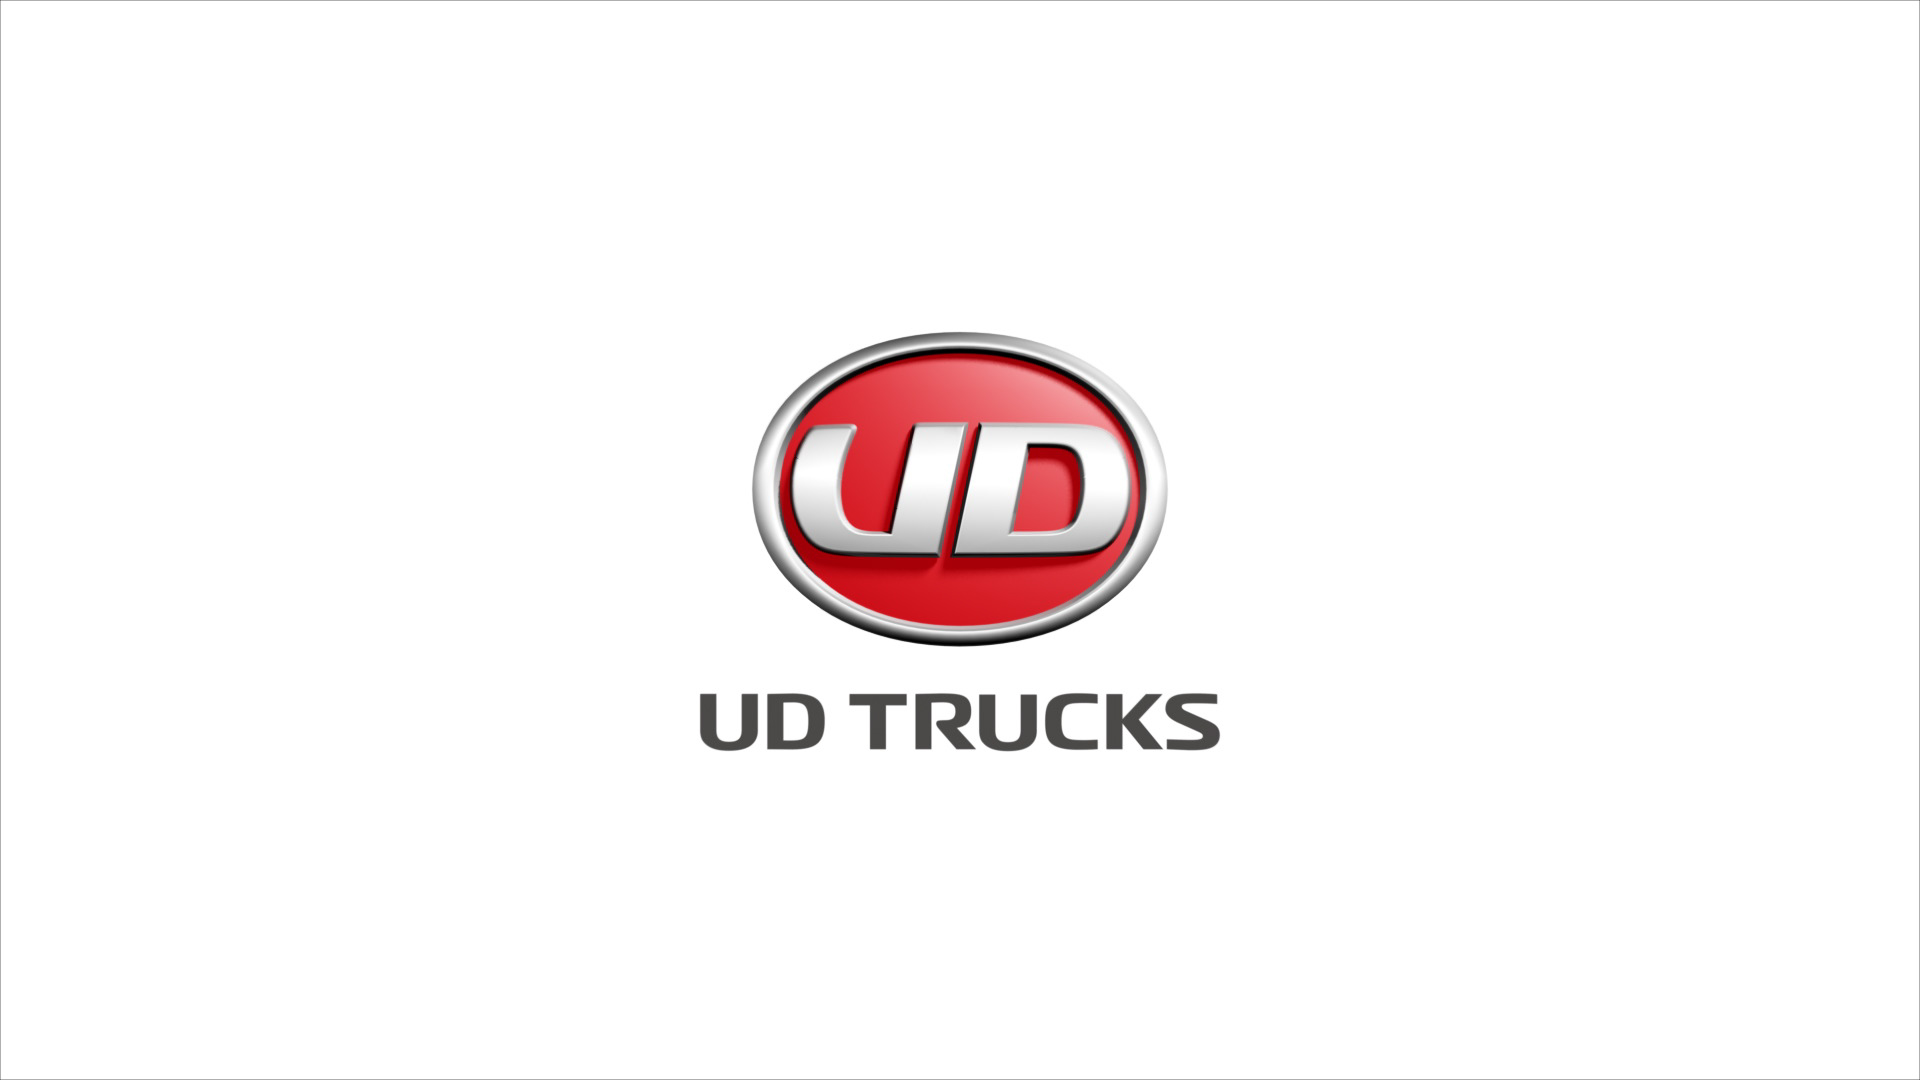 UD Trucks motion logo